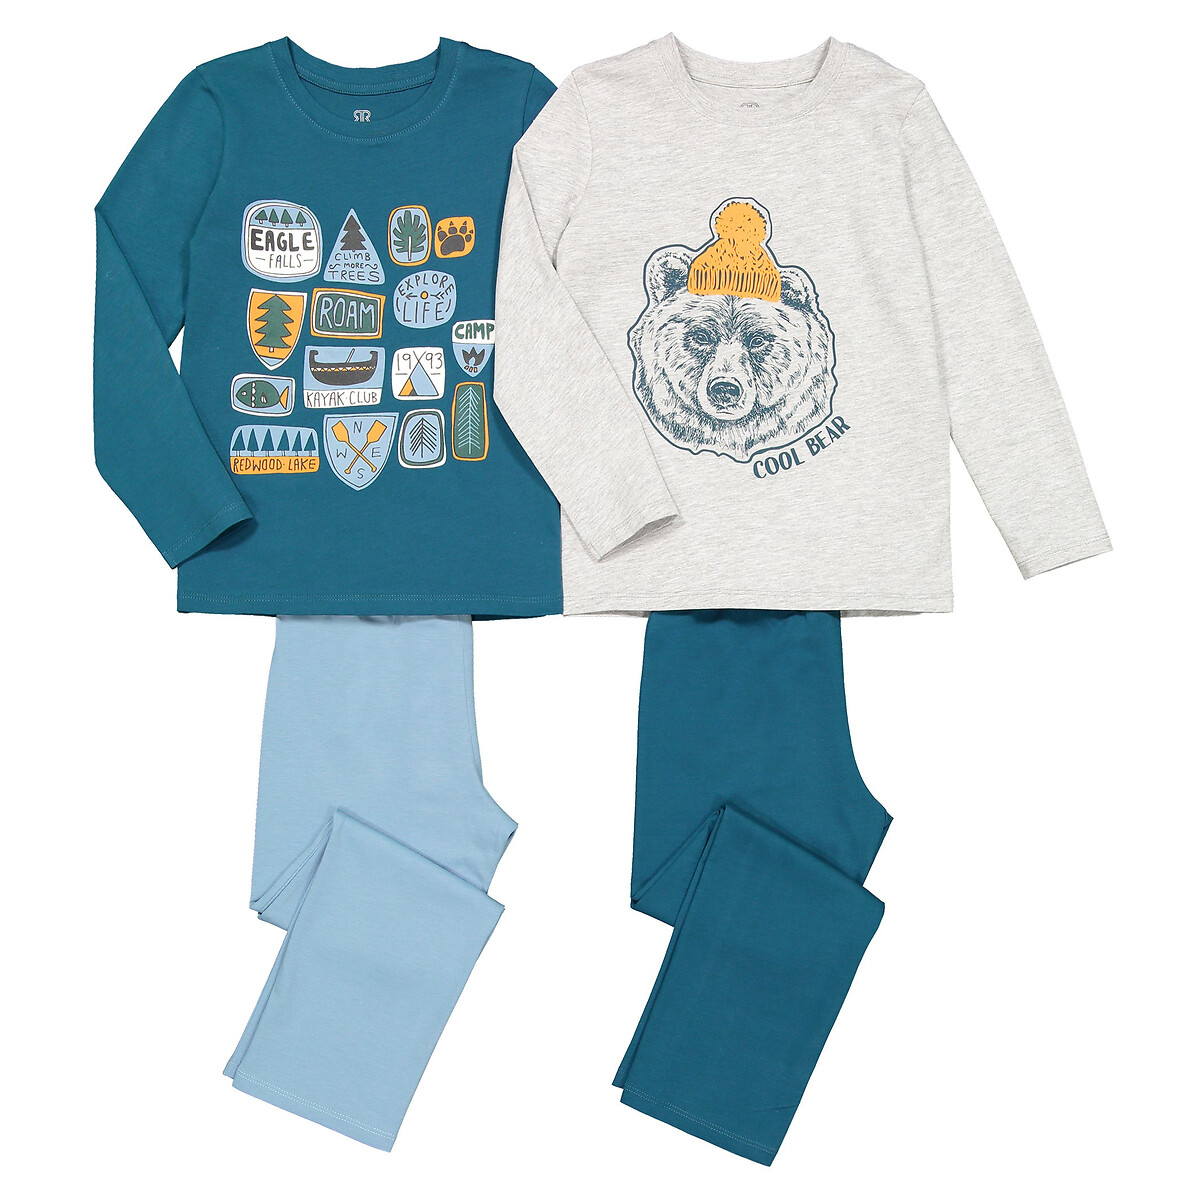 Комплект из  пижам с La Redoute Рисунком Медведь  3 года - 94 см синий, размер 3 года - 94 см